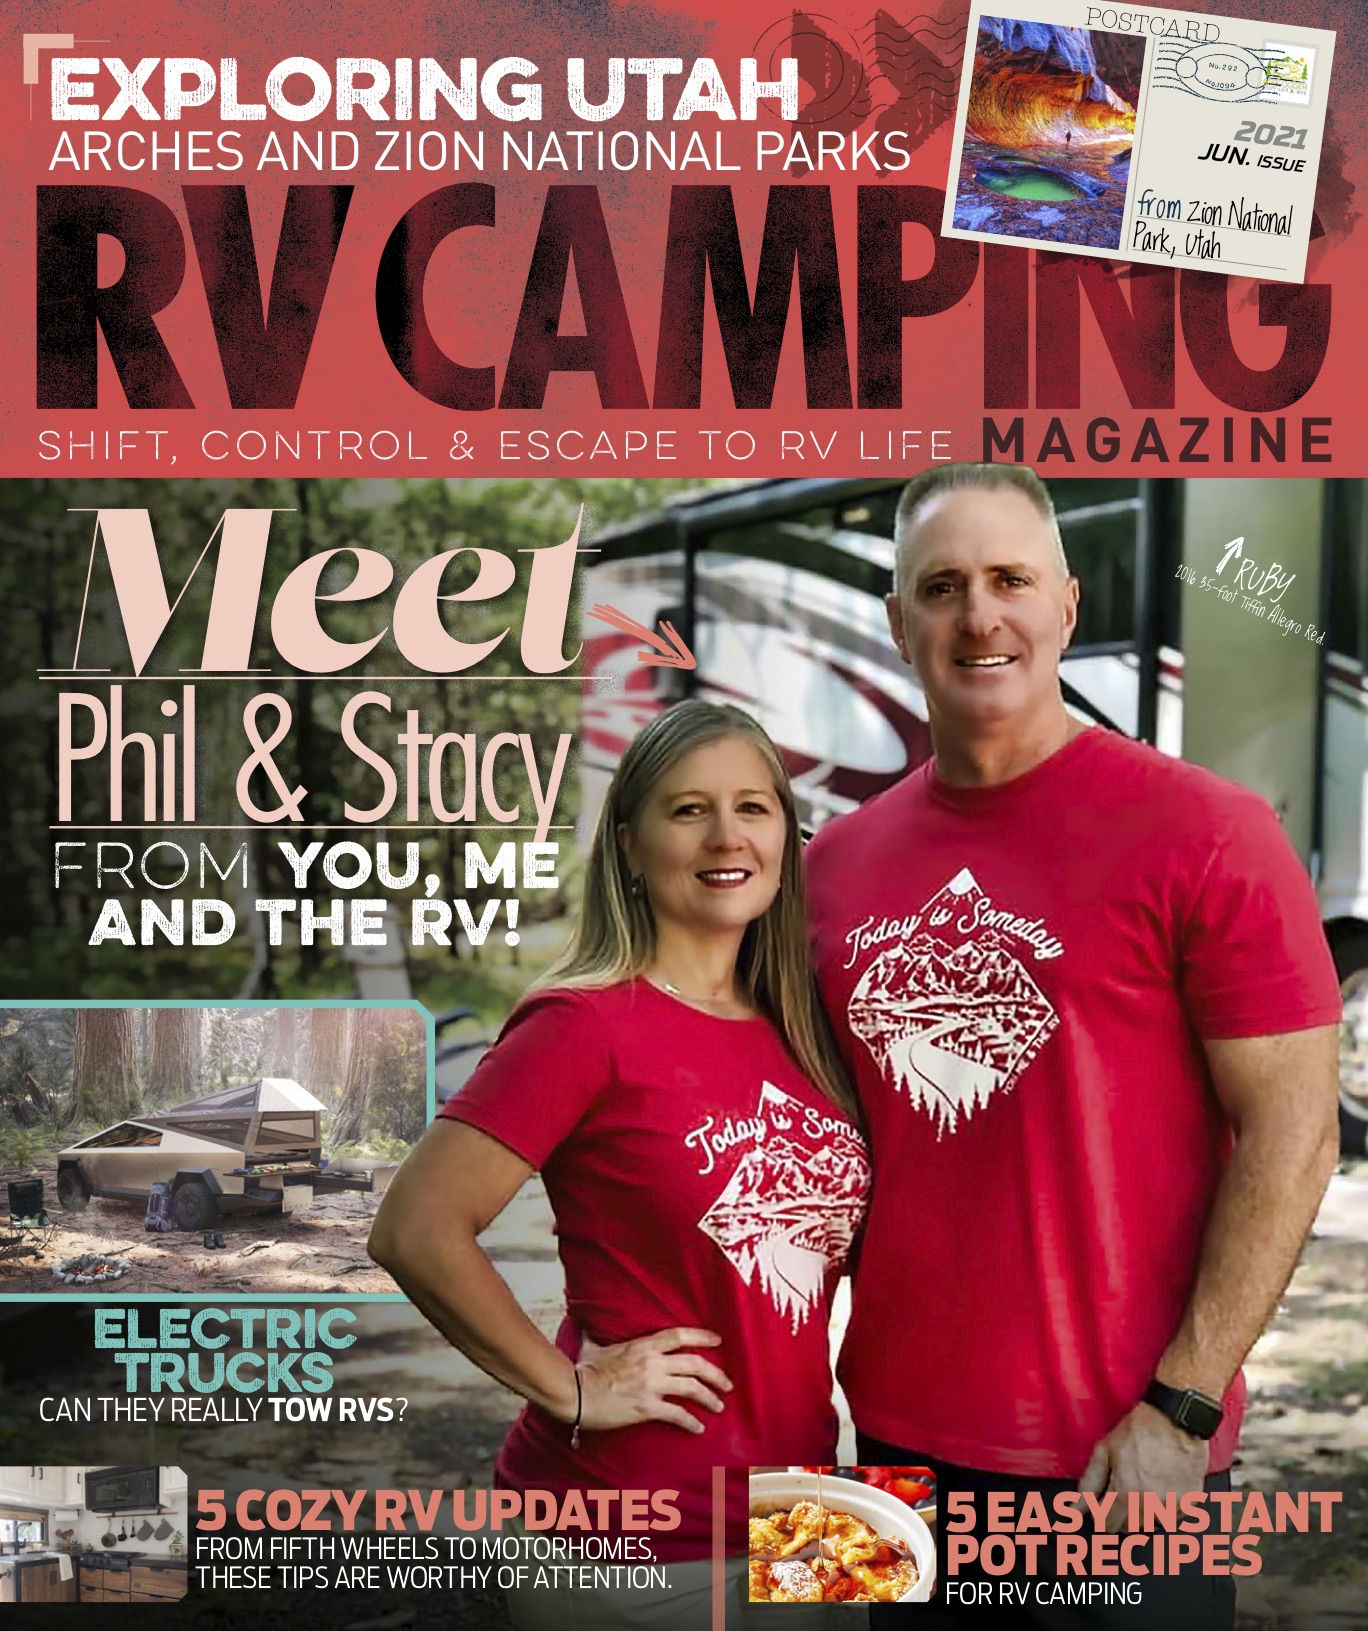 RV Camping Magazine June Issue